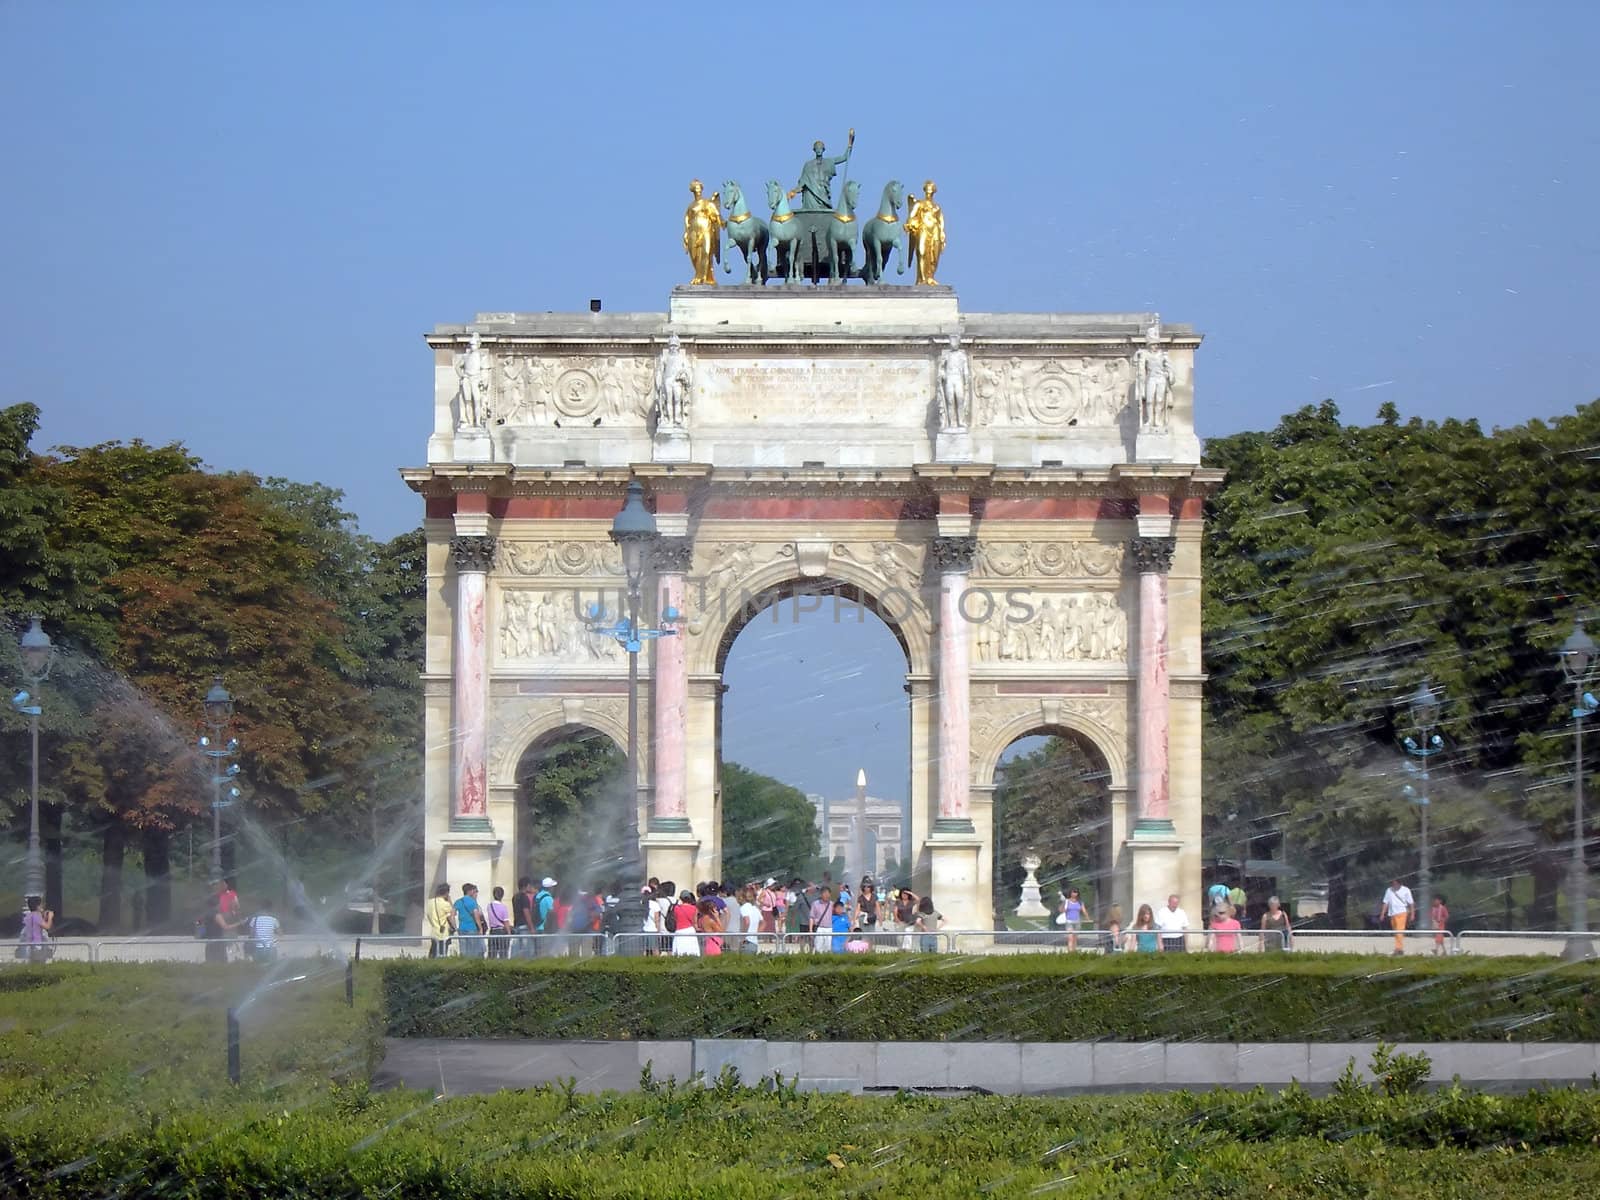        triumph arch in Paris with fountain   